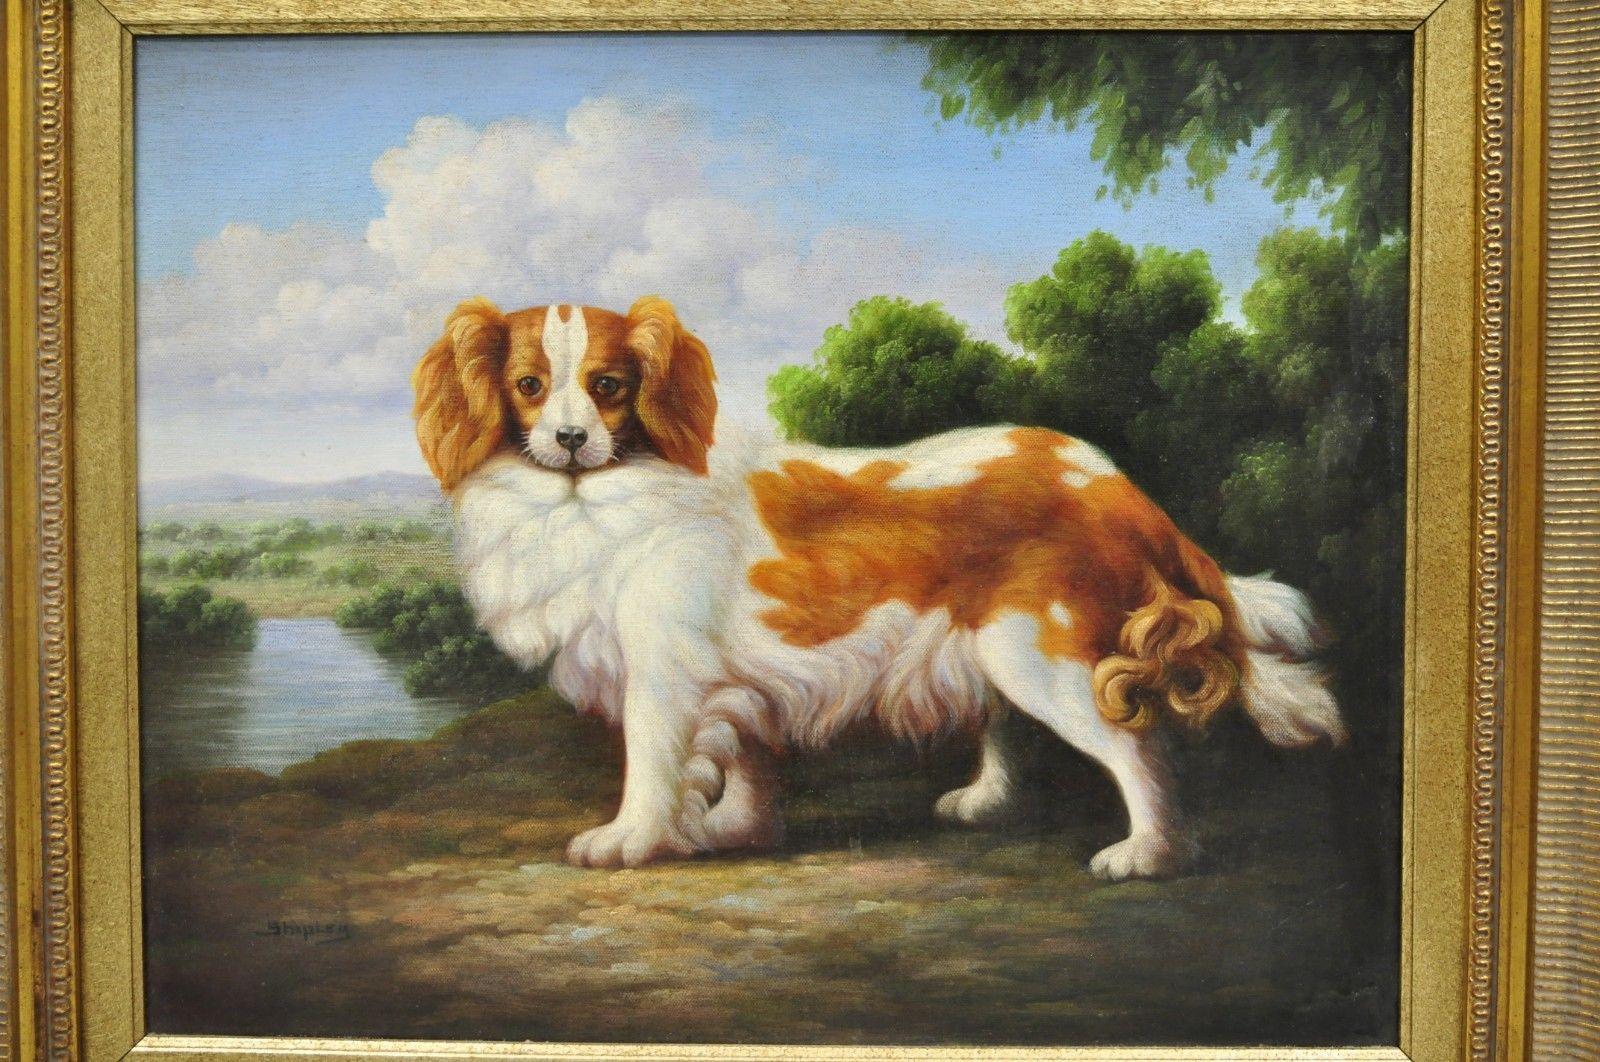 Shipley signed oil painting Spaniel dog in landscape gold frame. Signed 